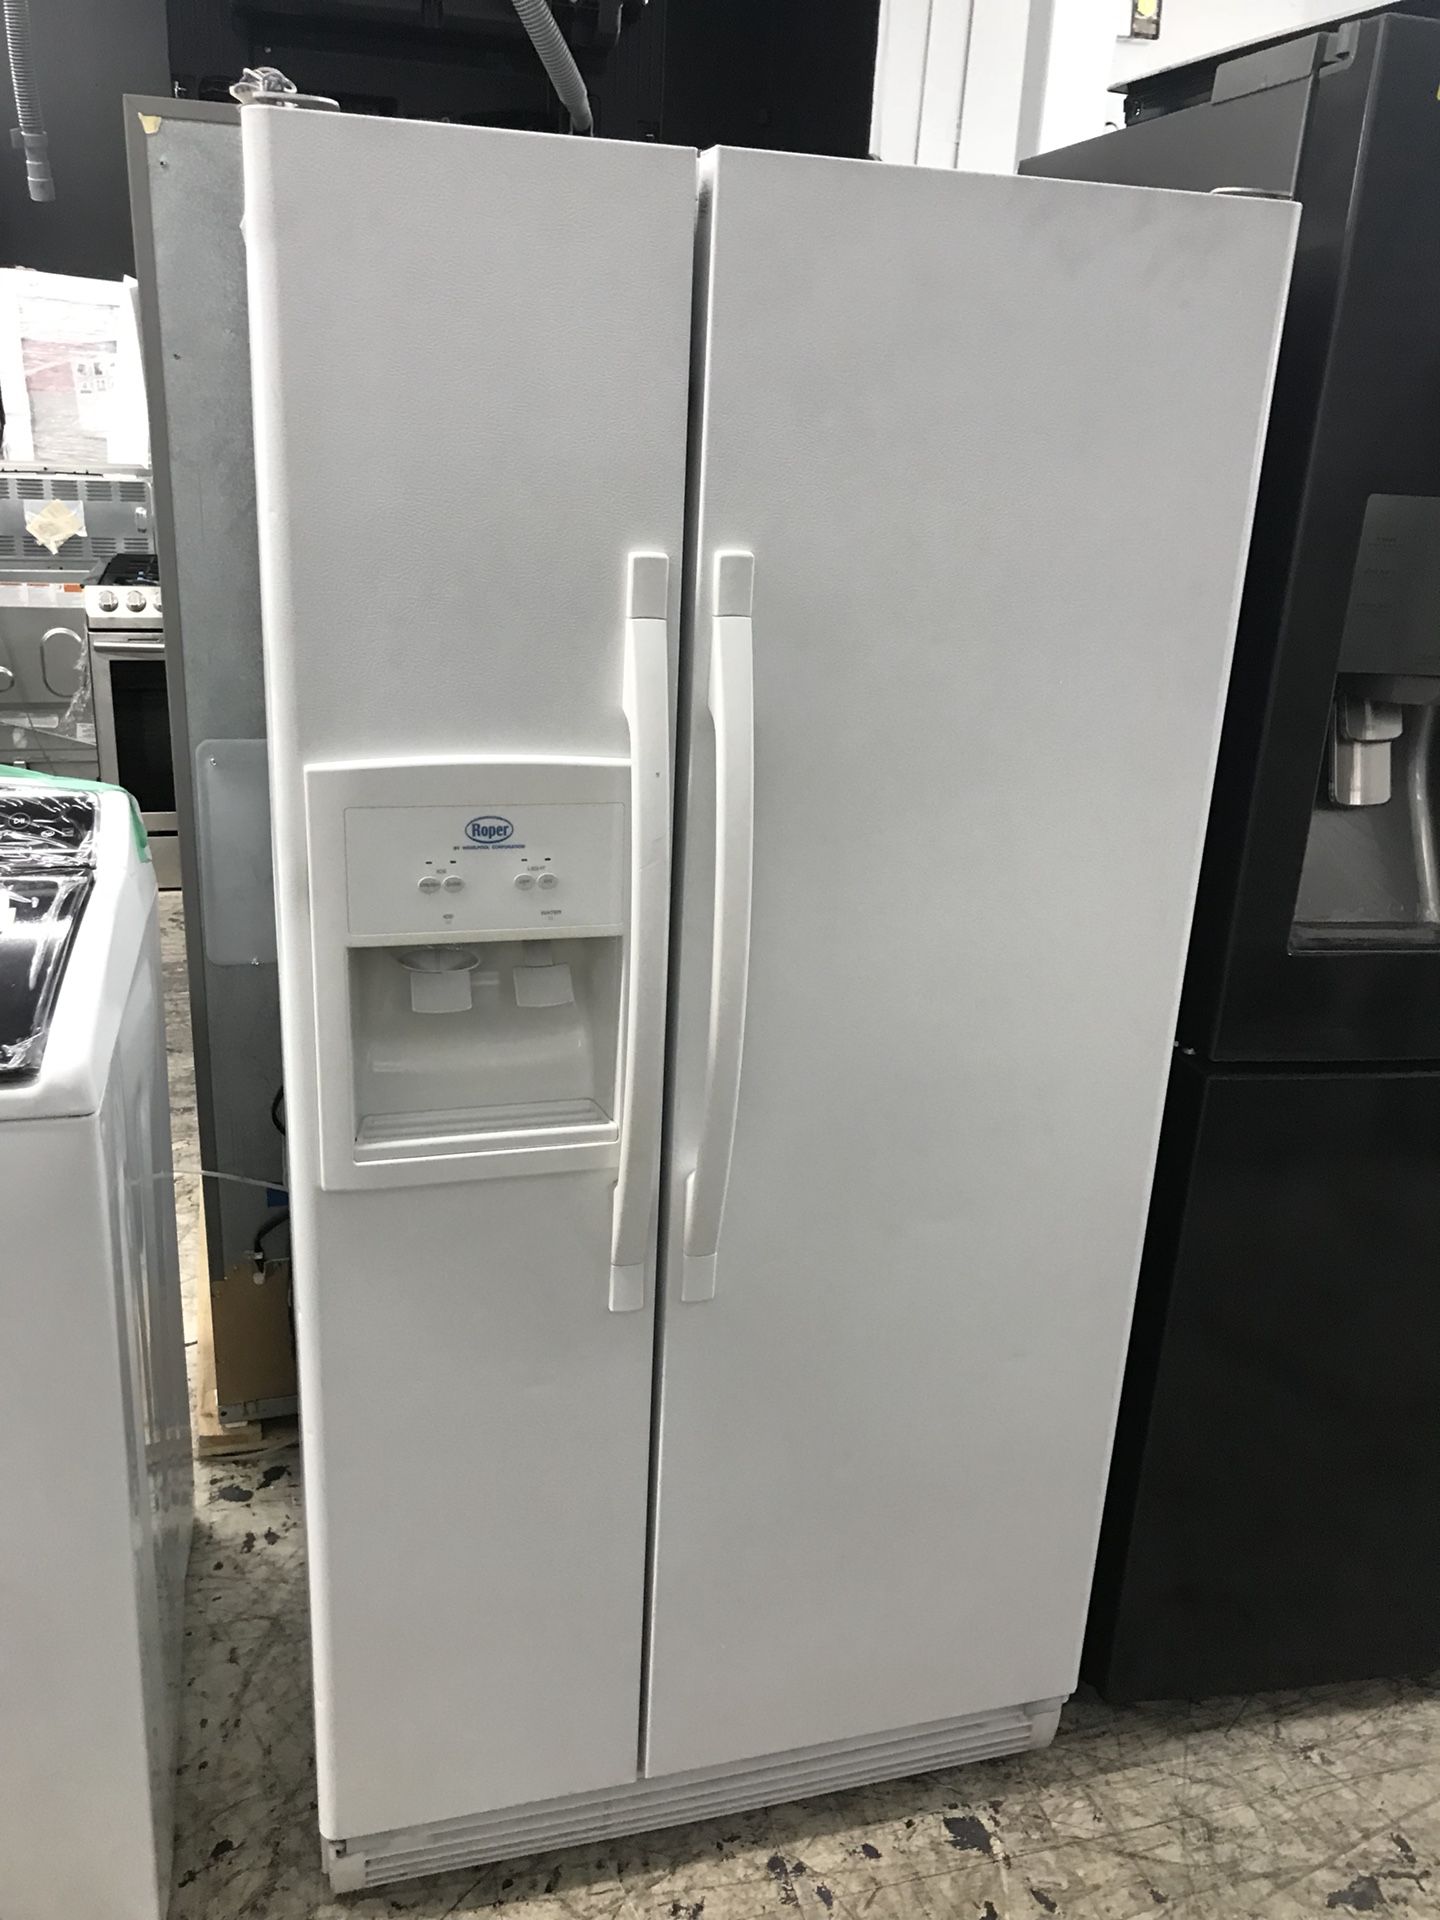 Roper side by side refrigerator white